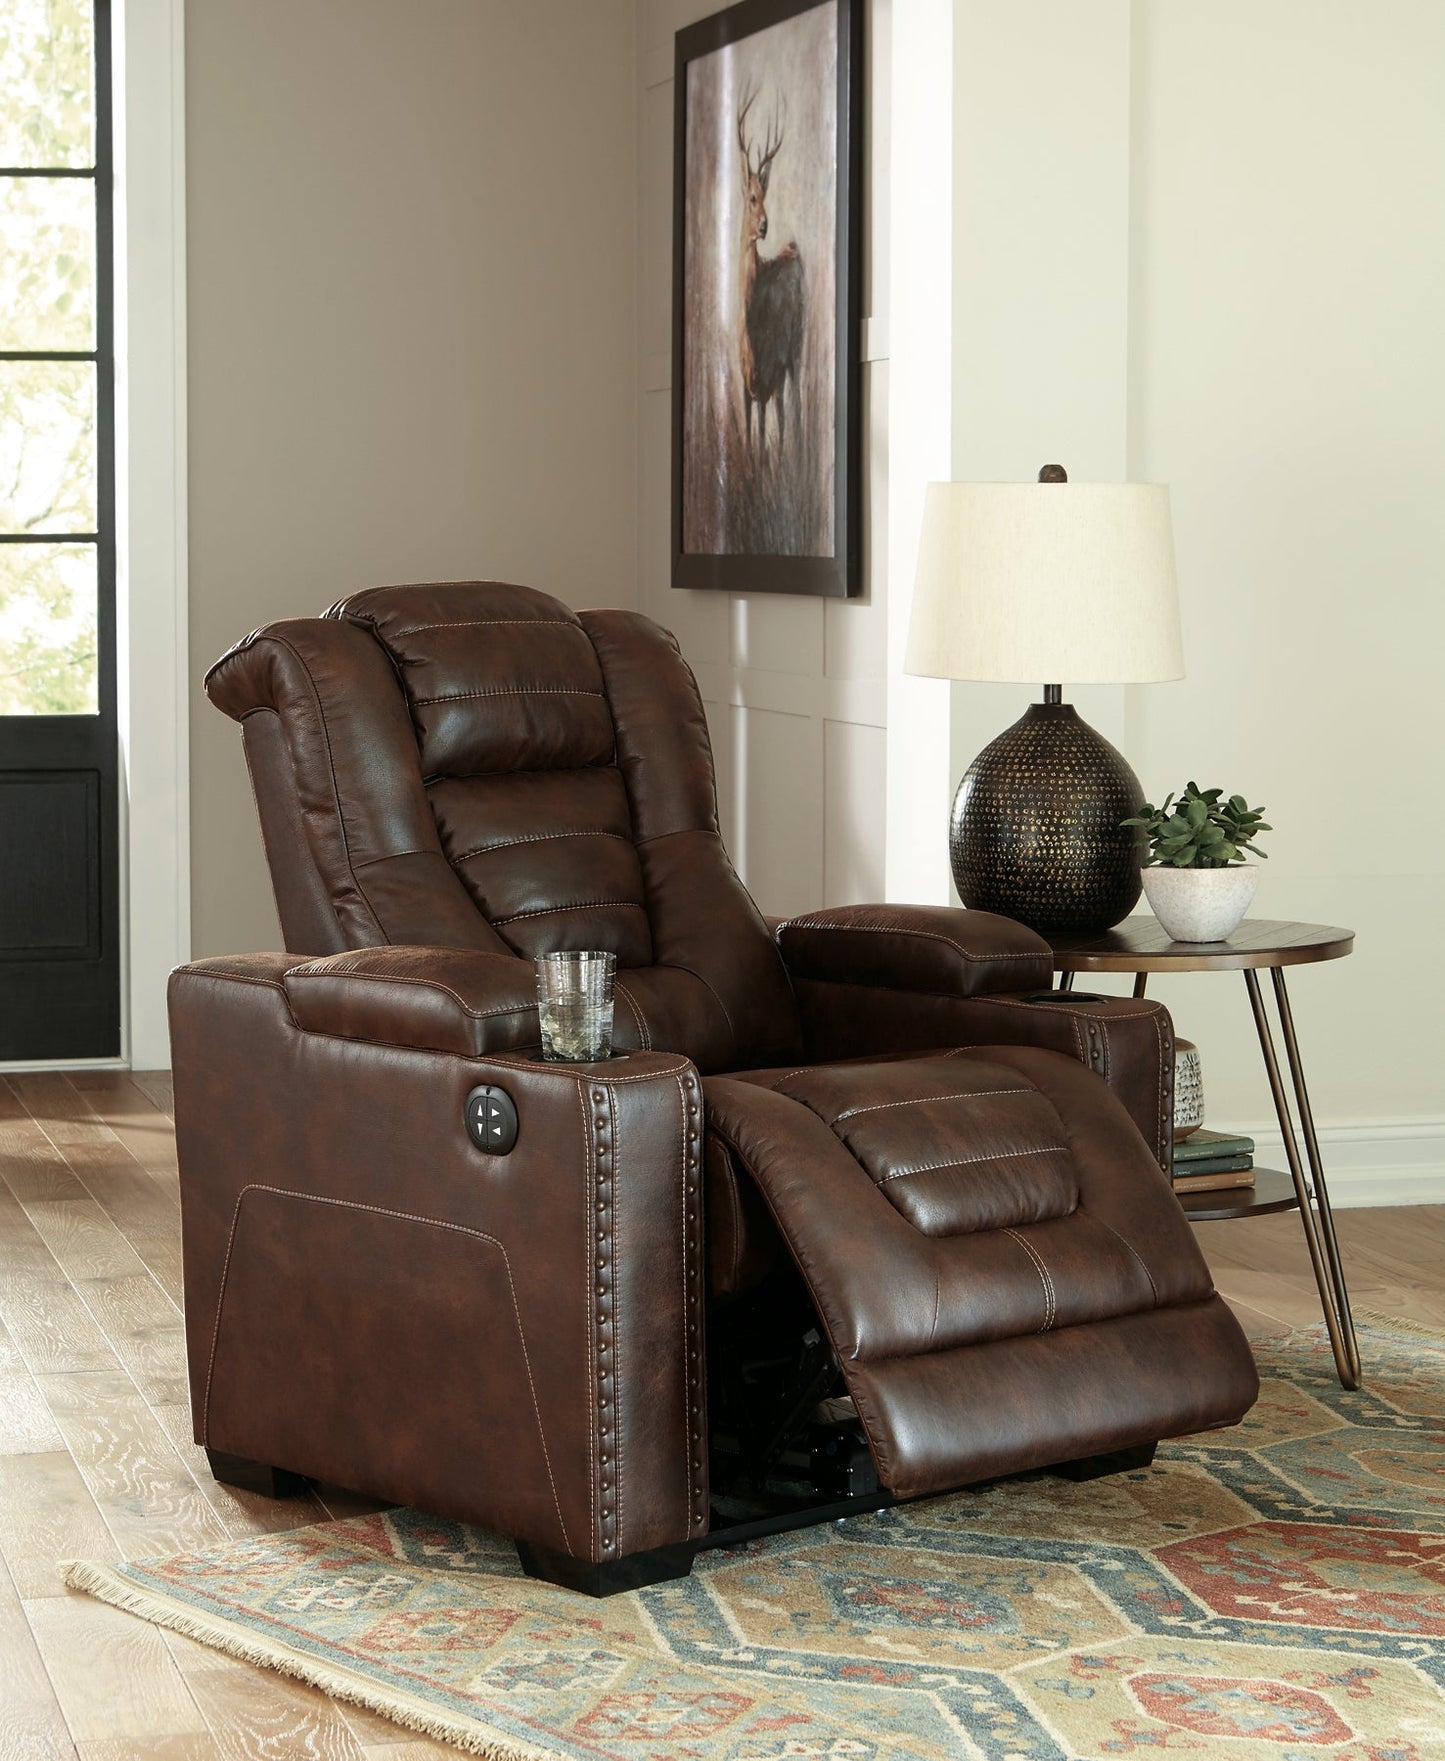 Owner's Box PWR Recliner/ADJ Headrest at Cloud 9 Mattress & Furniture furniture, home furnishing, home decor